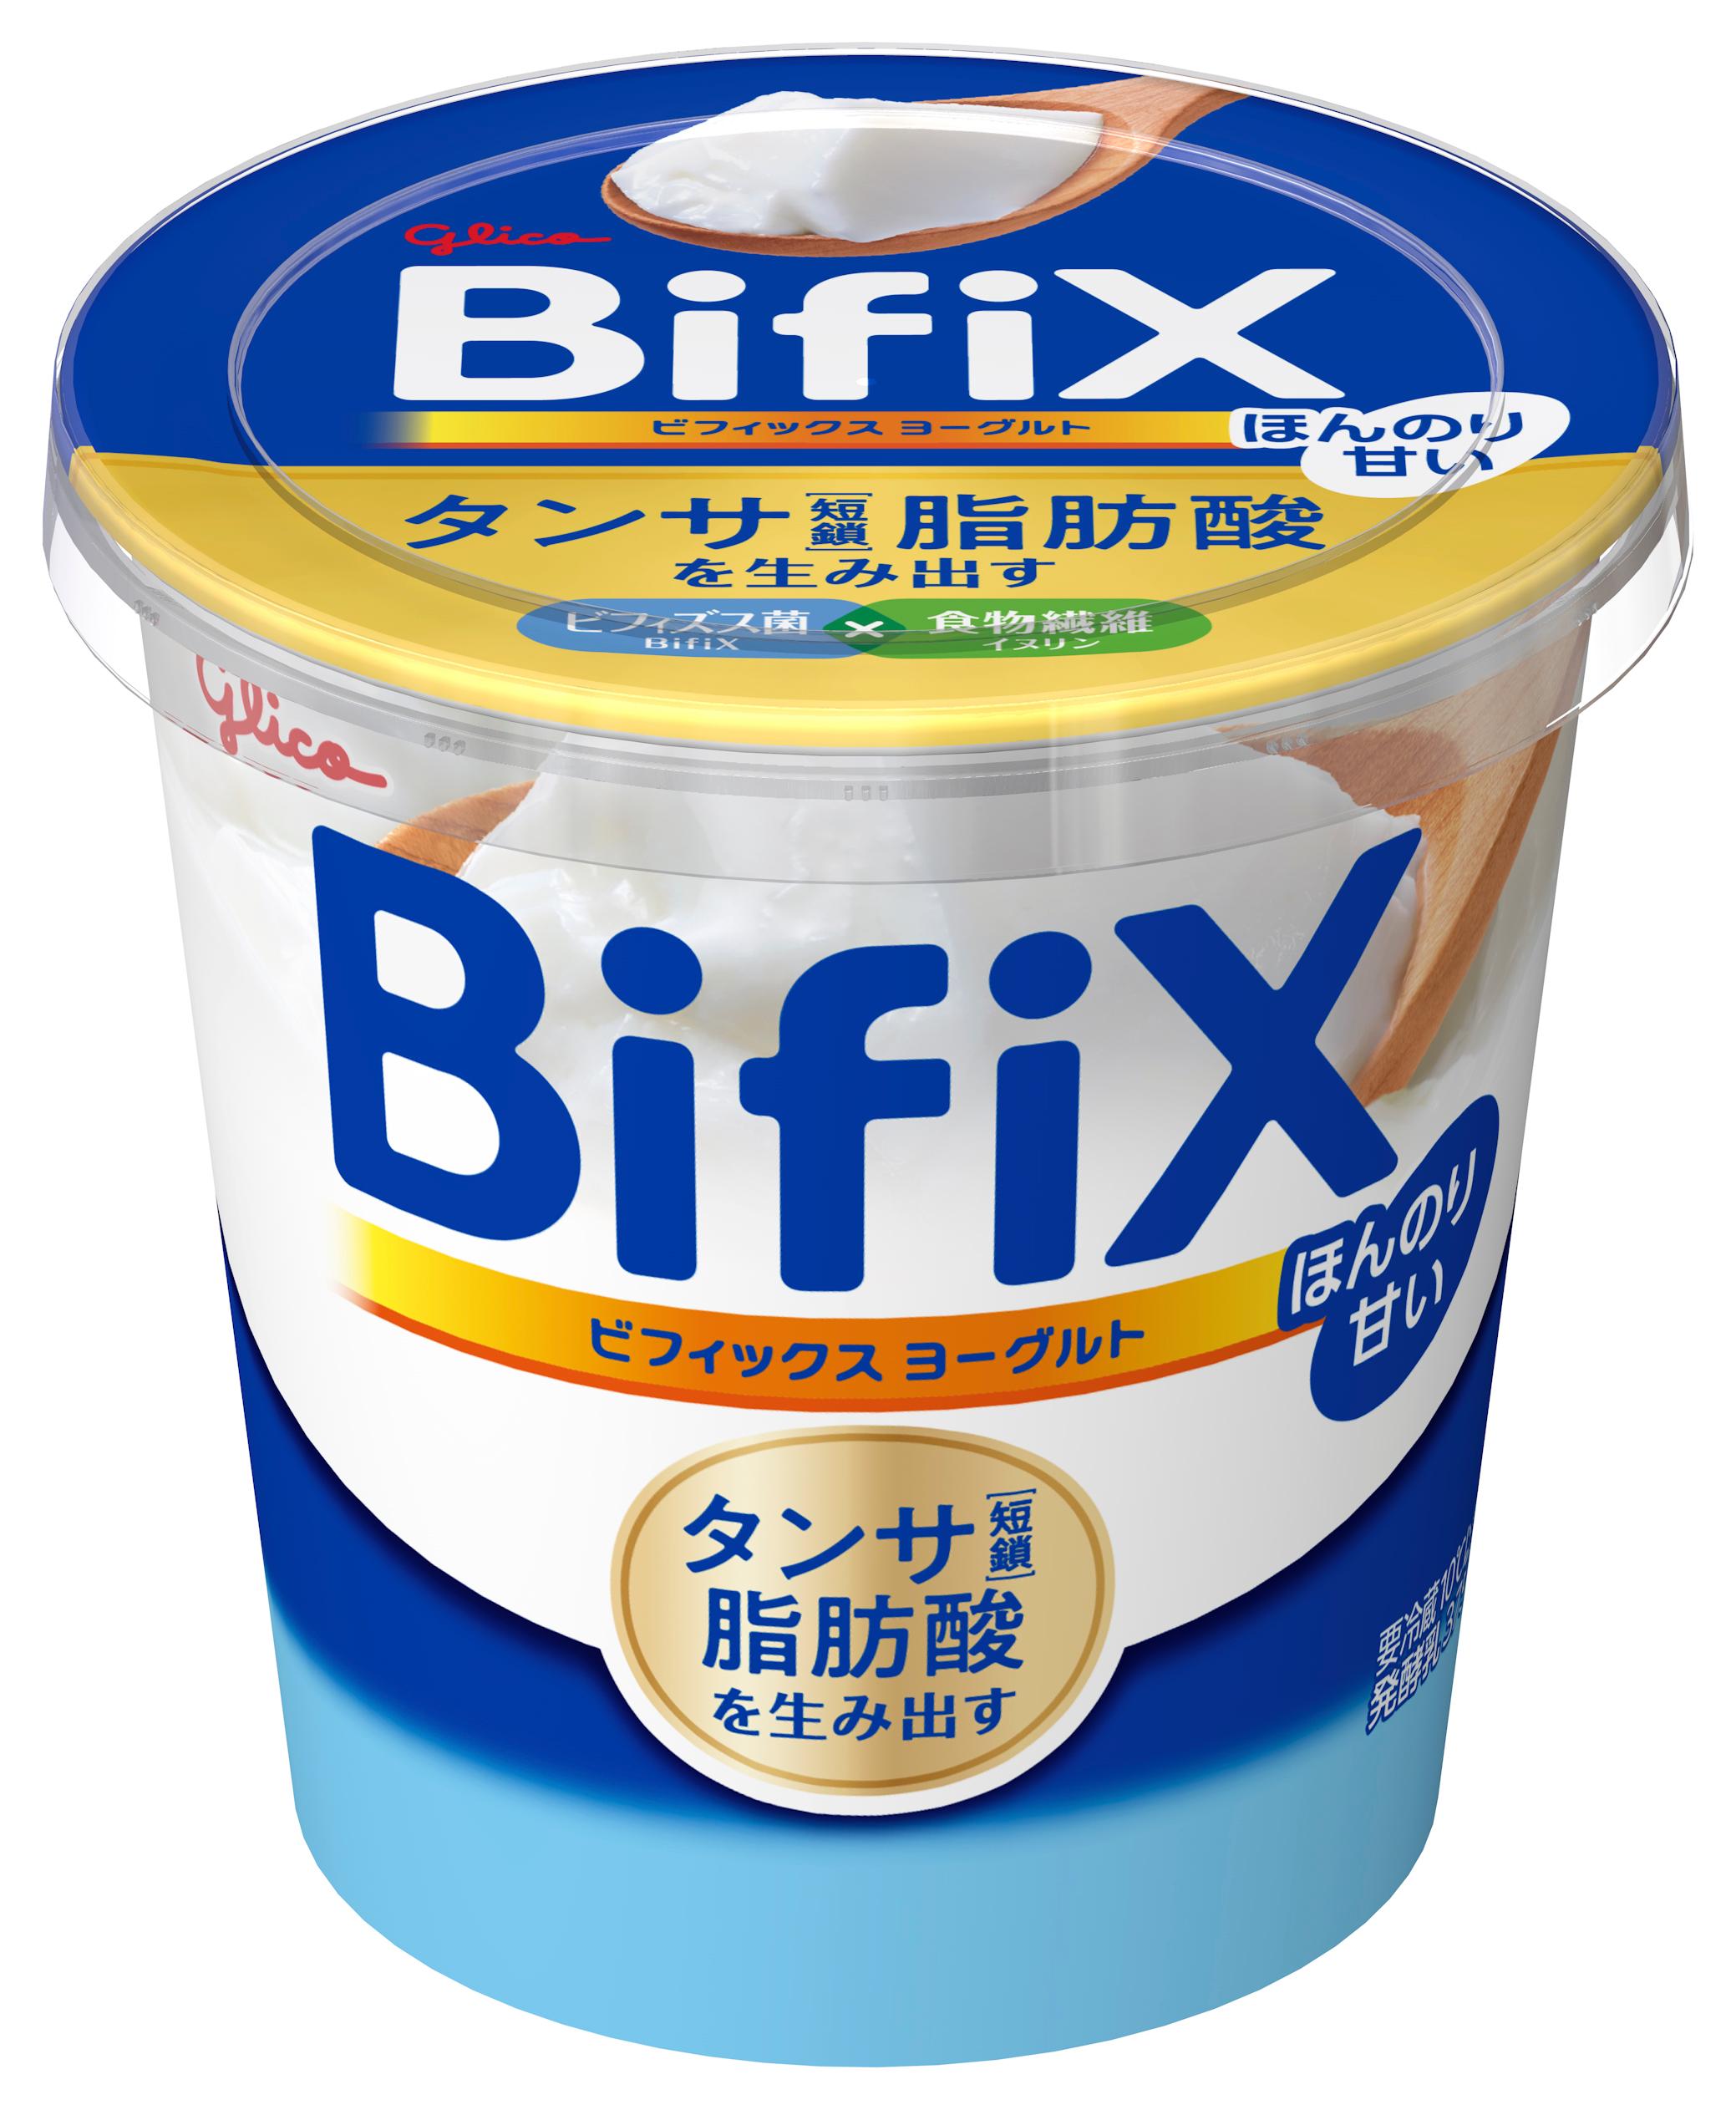 BifiXヨーグルト ほんのり甘い 375g | 【公式】江崎グリコ(Glico)